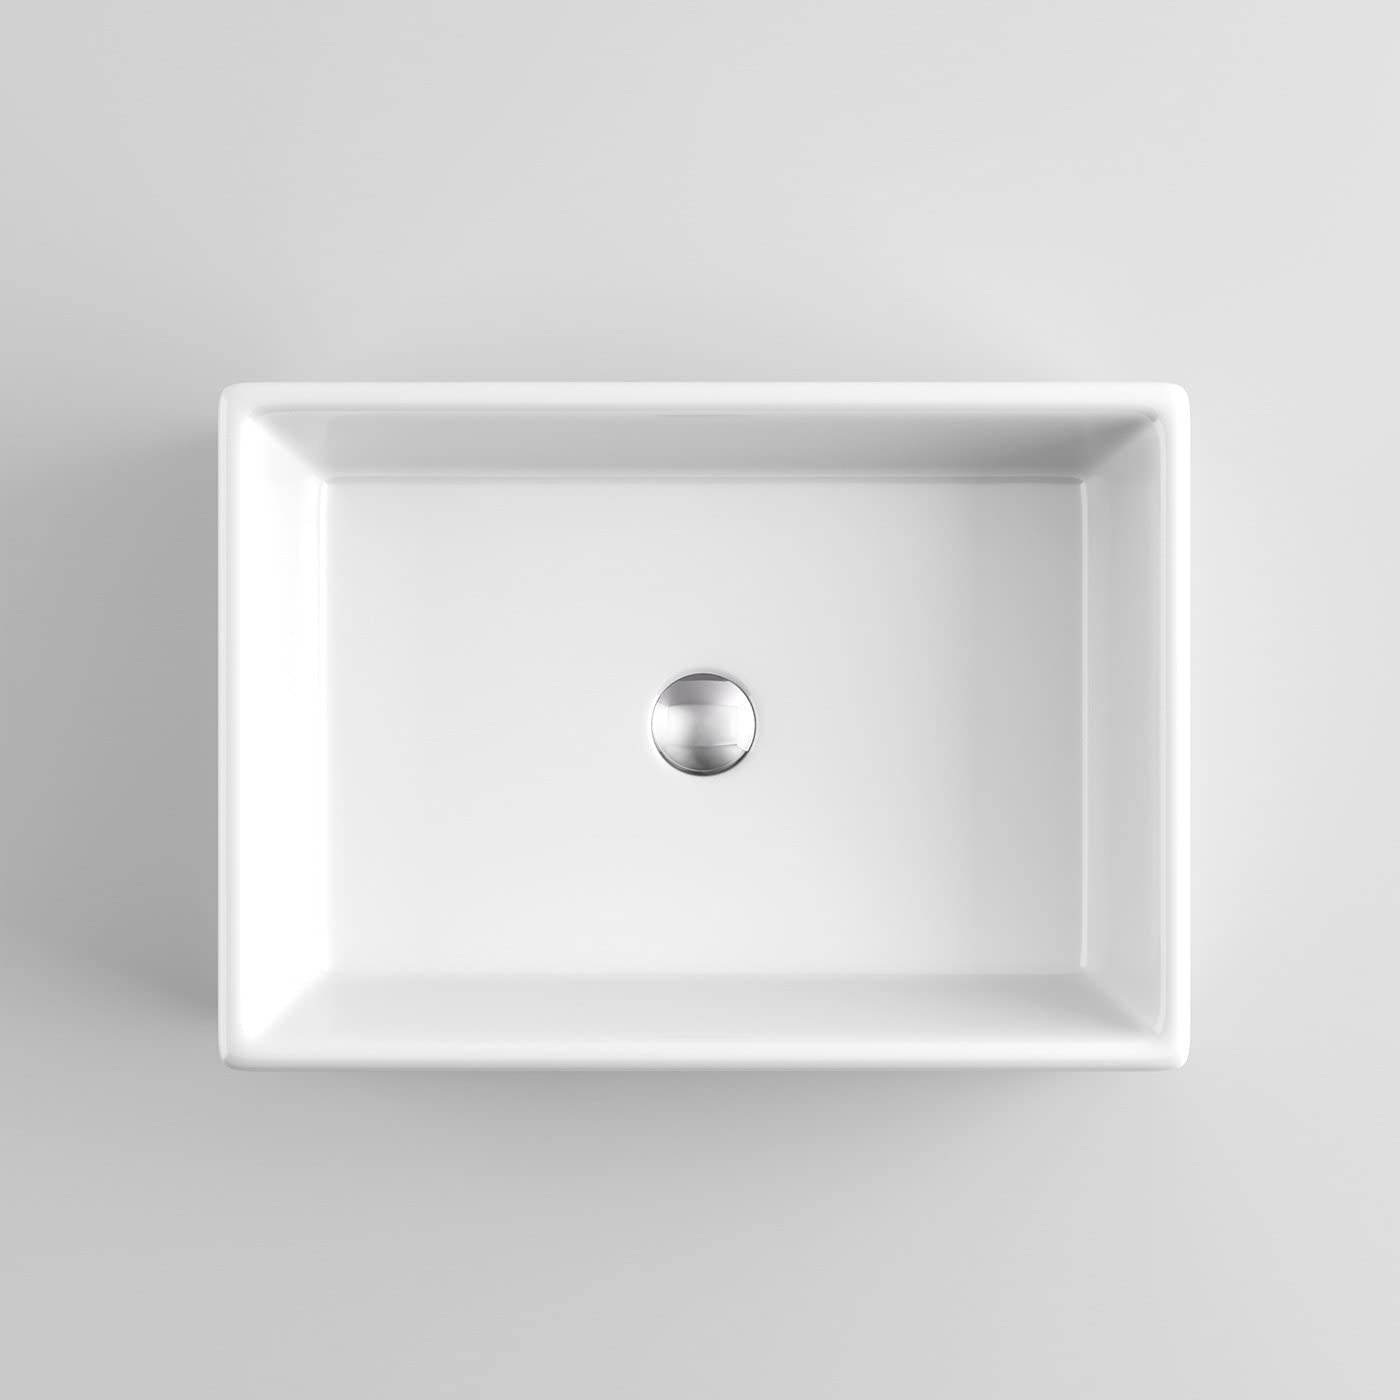 Modern Rectangular Ceramic Countertop Basin - 480mm x 390mm - Gloss White